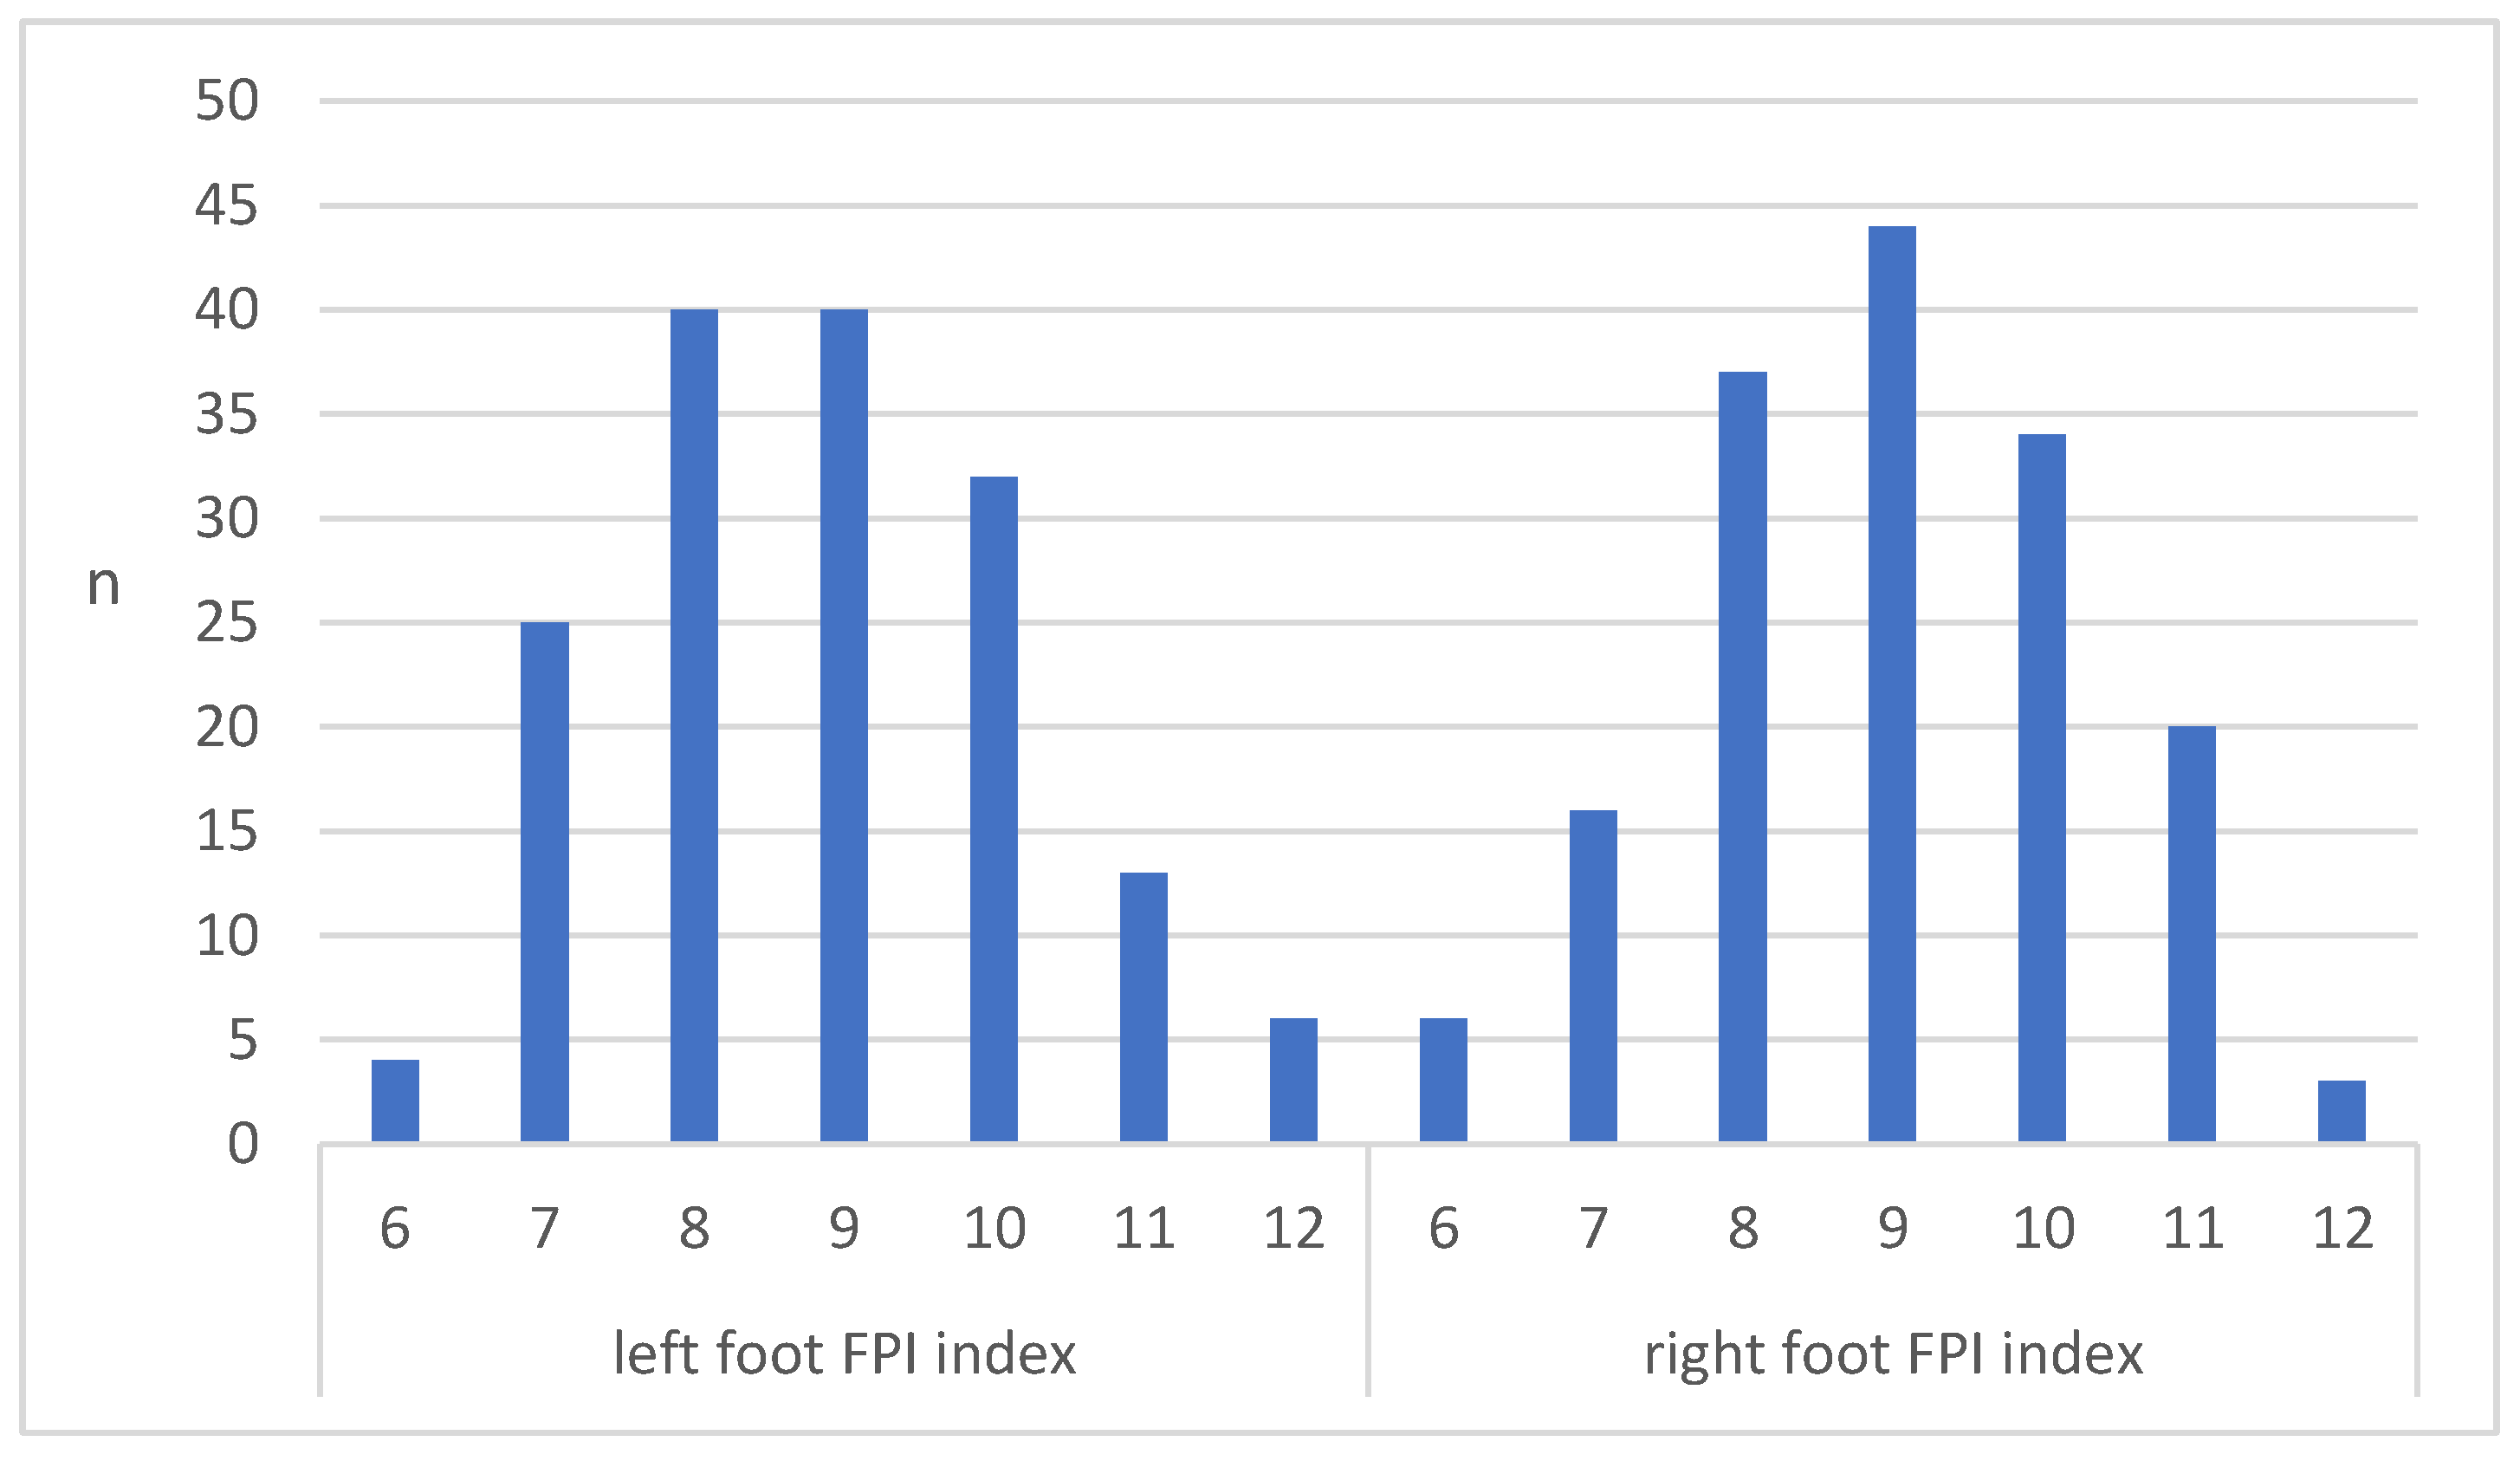 Flexible Flatfoot - Foot Health Facts